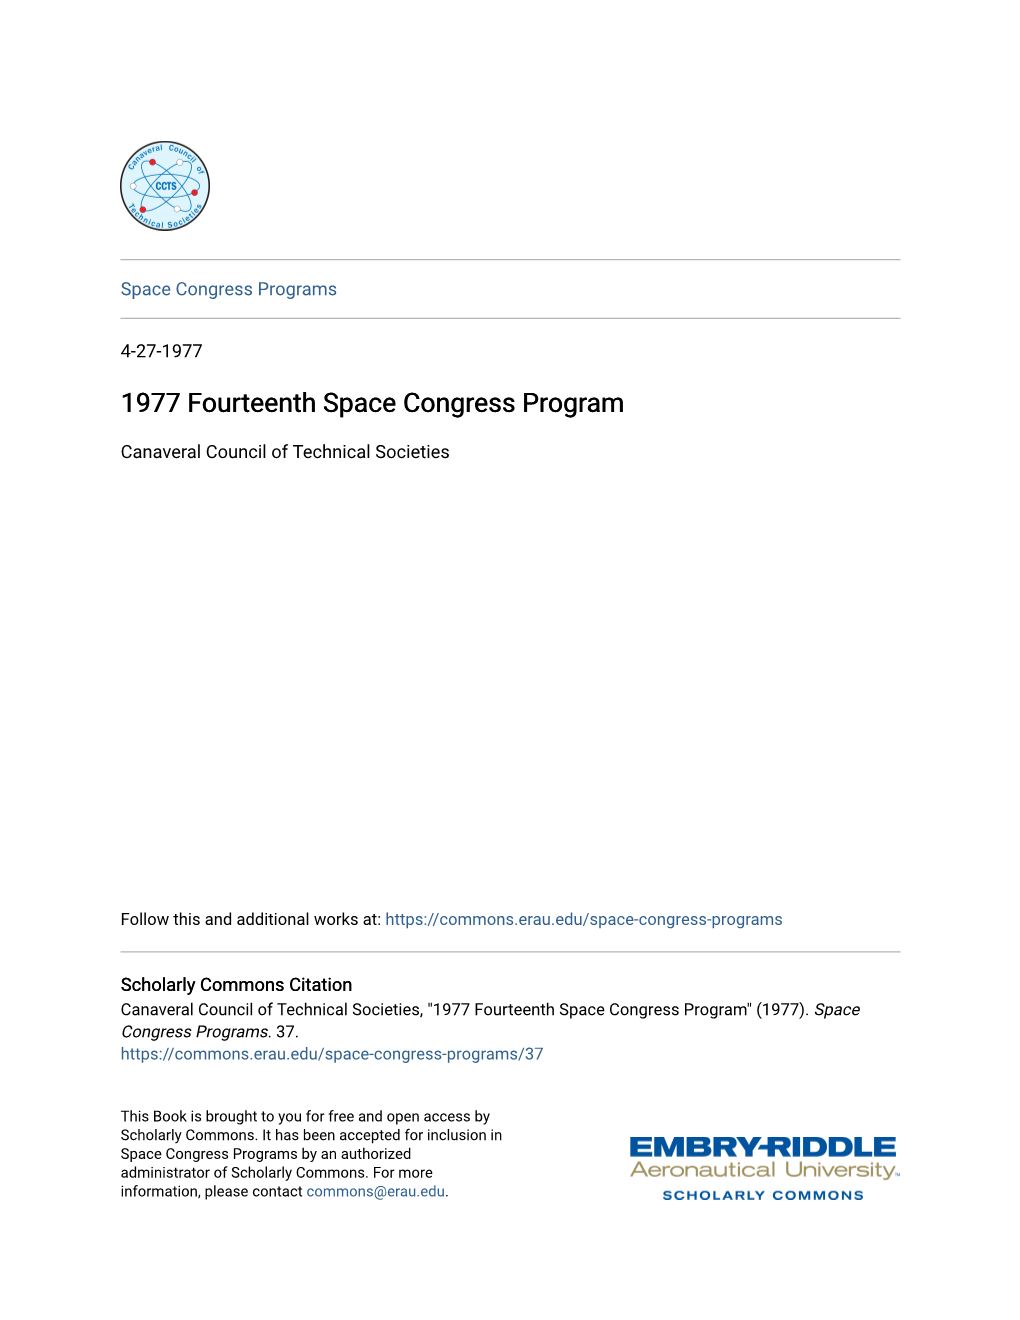 1977 Fourteenth Space Congress Program